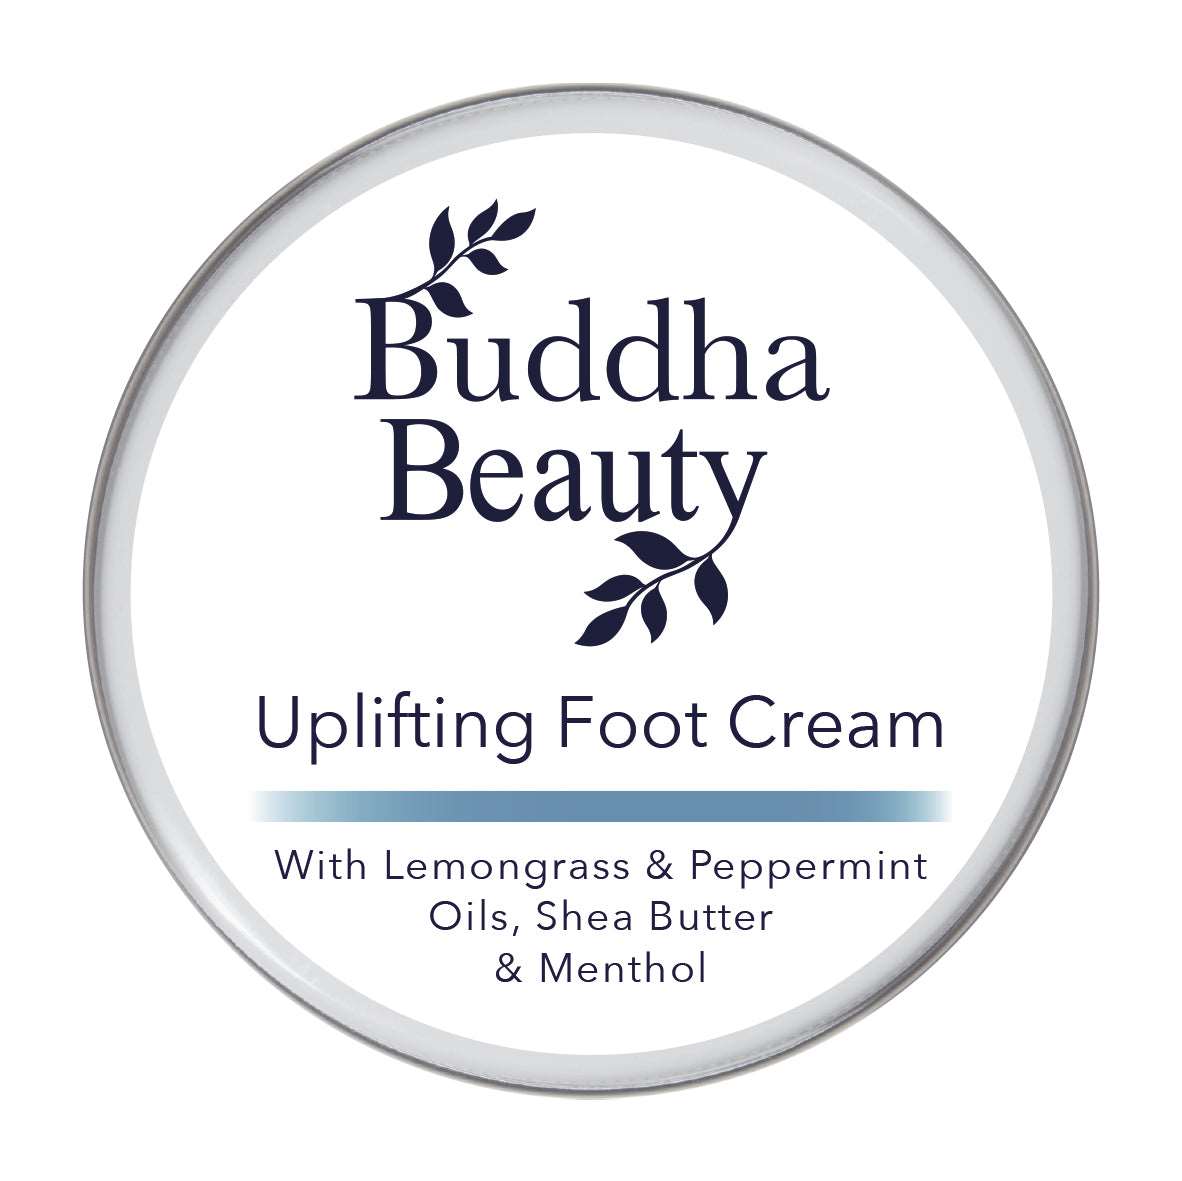 Uplifting Foot Cream with Lemongrass & Peppermint - Buddha Beauty Skincare Foot Cream #vegan# #cruelty-free# #skincare#